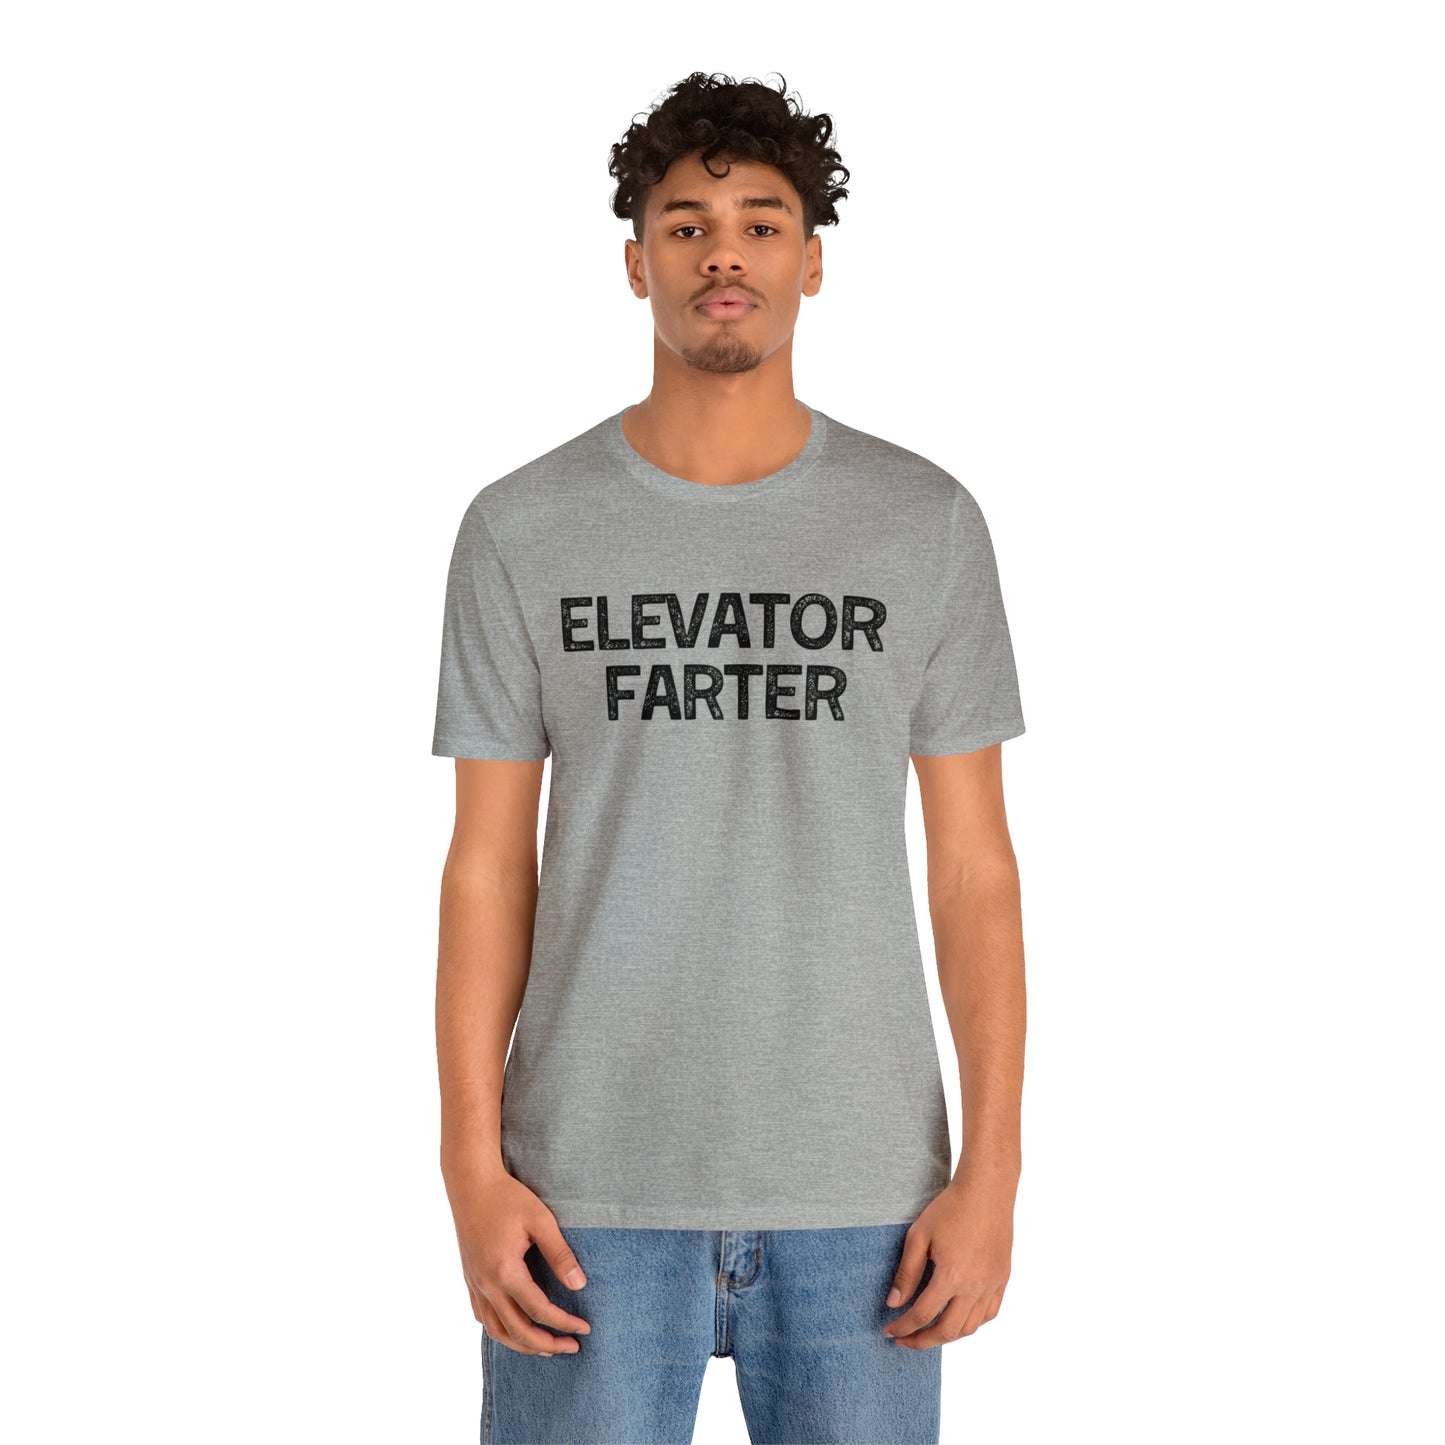 ELEVATOR FARTER Unisex Jersey Short Sleeve Tee (T-Shirt)